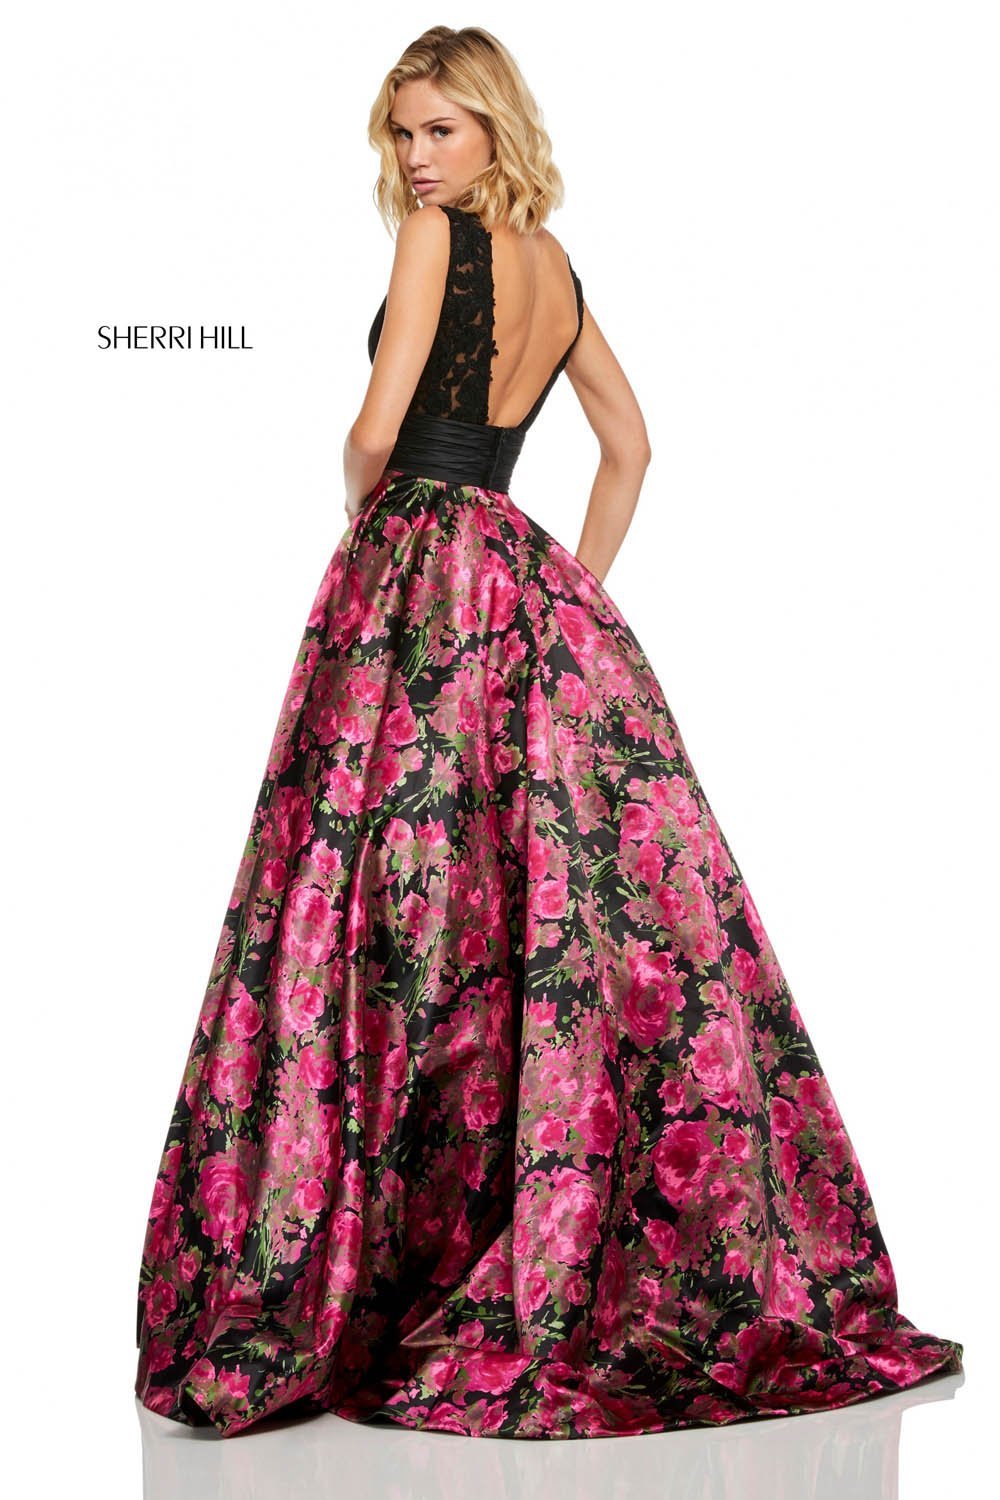 Sherri Hill 52861 dress images in these colors: Black Fuchsia Print.